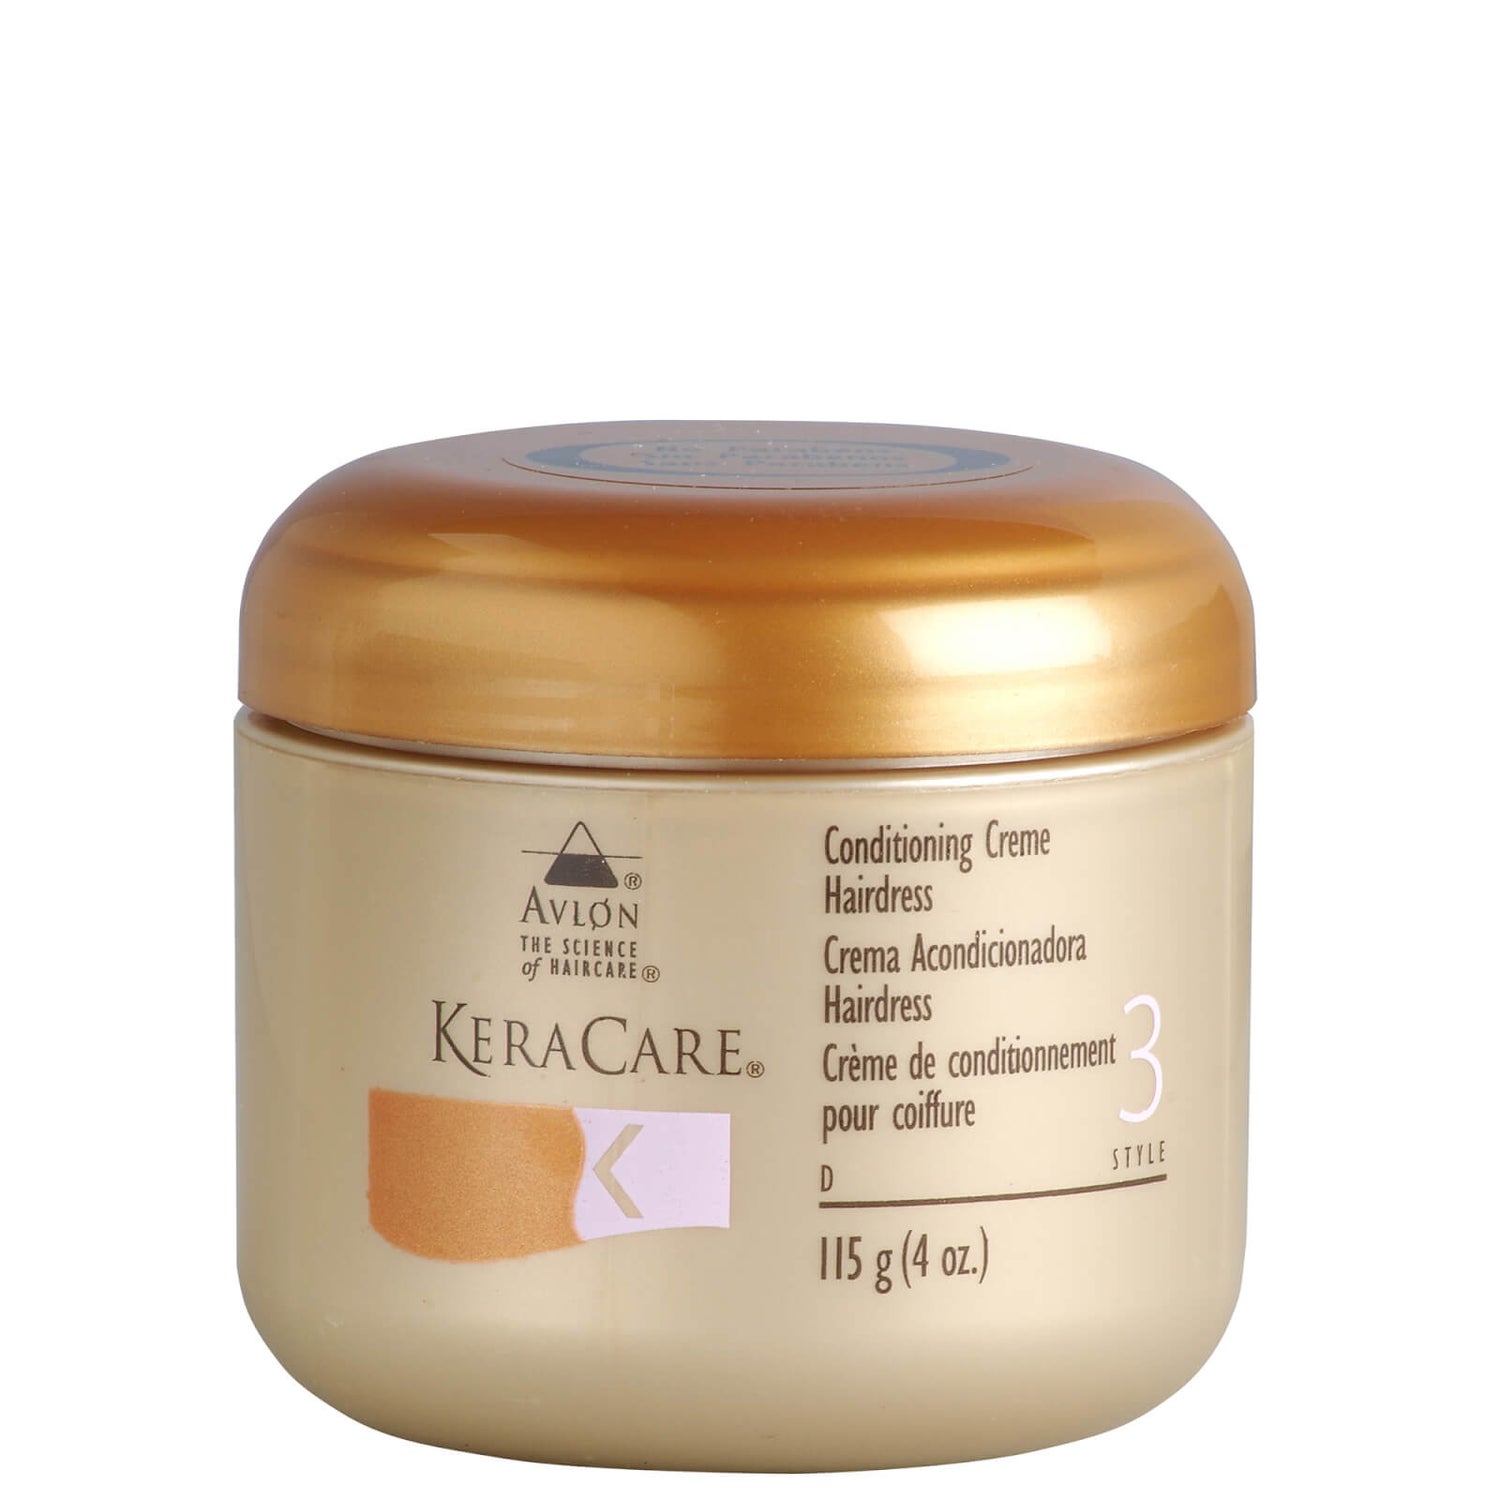 KeraCare Crème Hairdress (4oz)